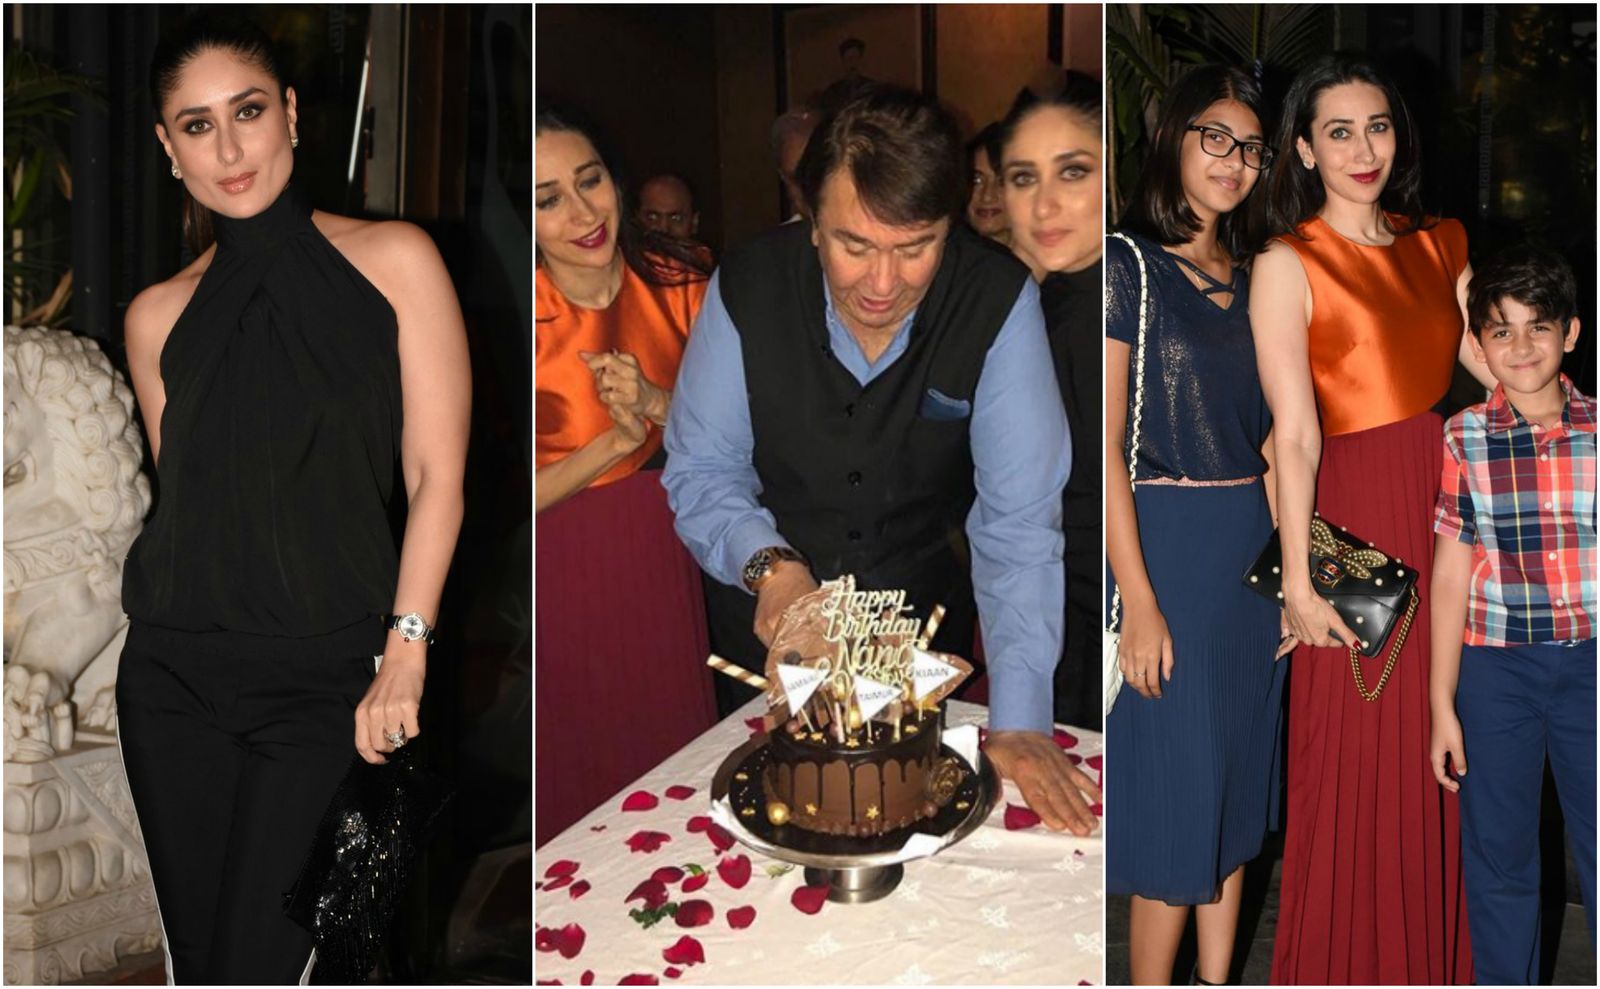 In Pictures: Kareena, Karisma Celebrate Dad Randhir Kapoor's Birthday In Style!